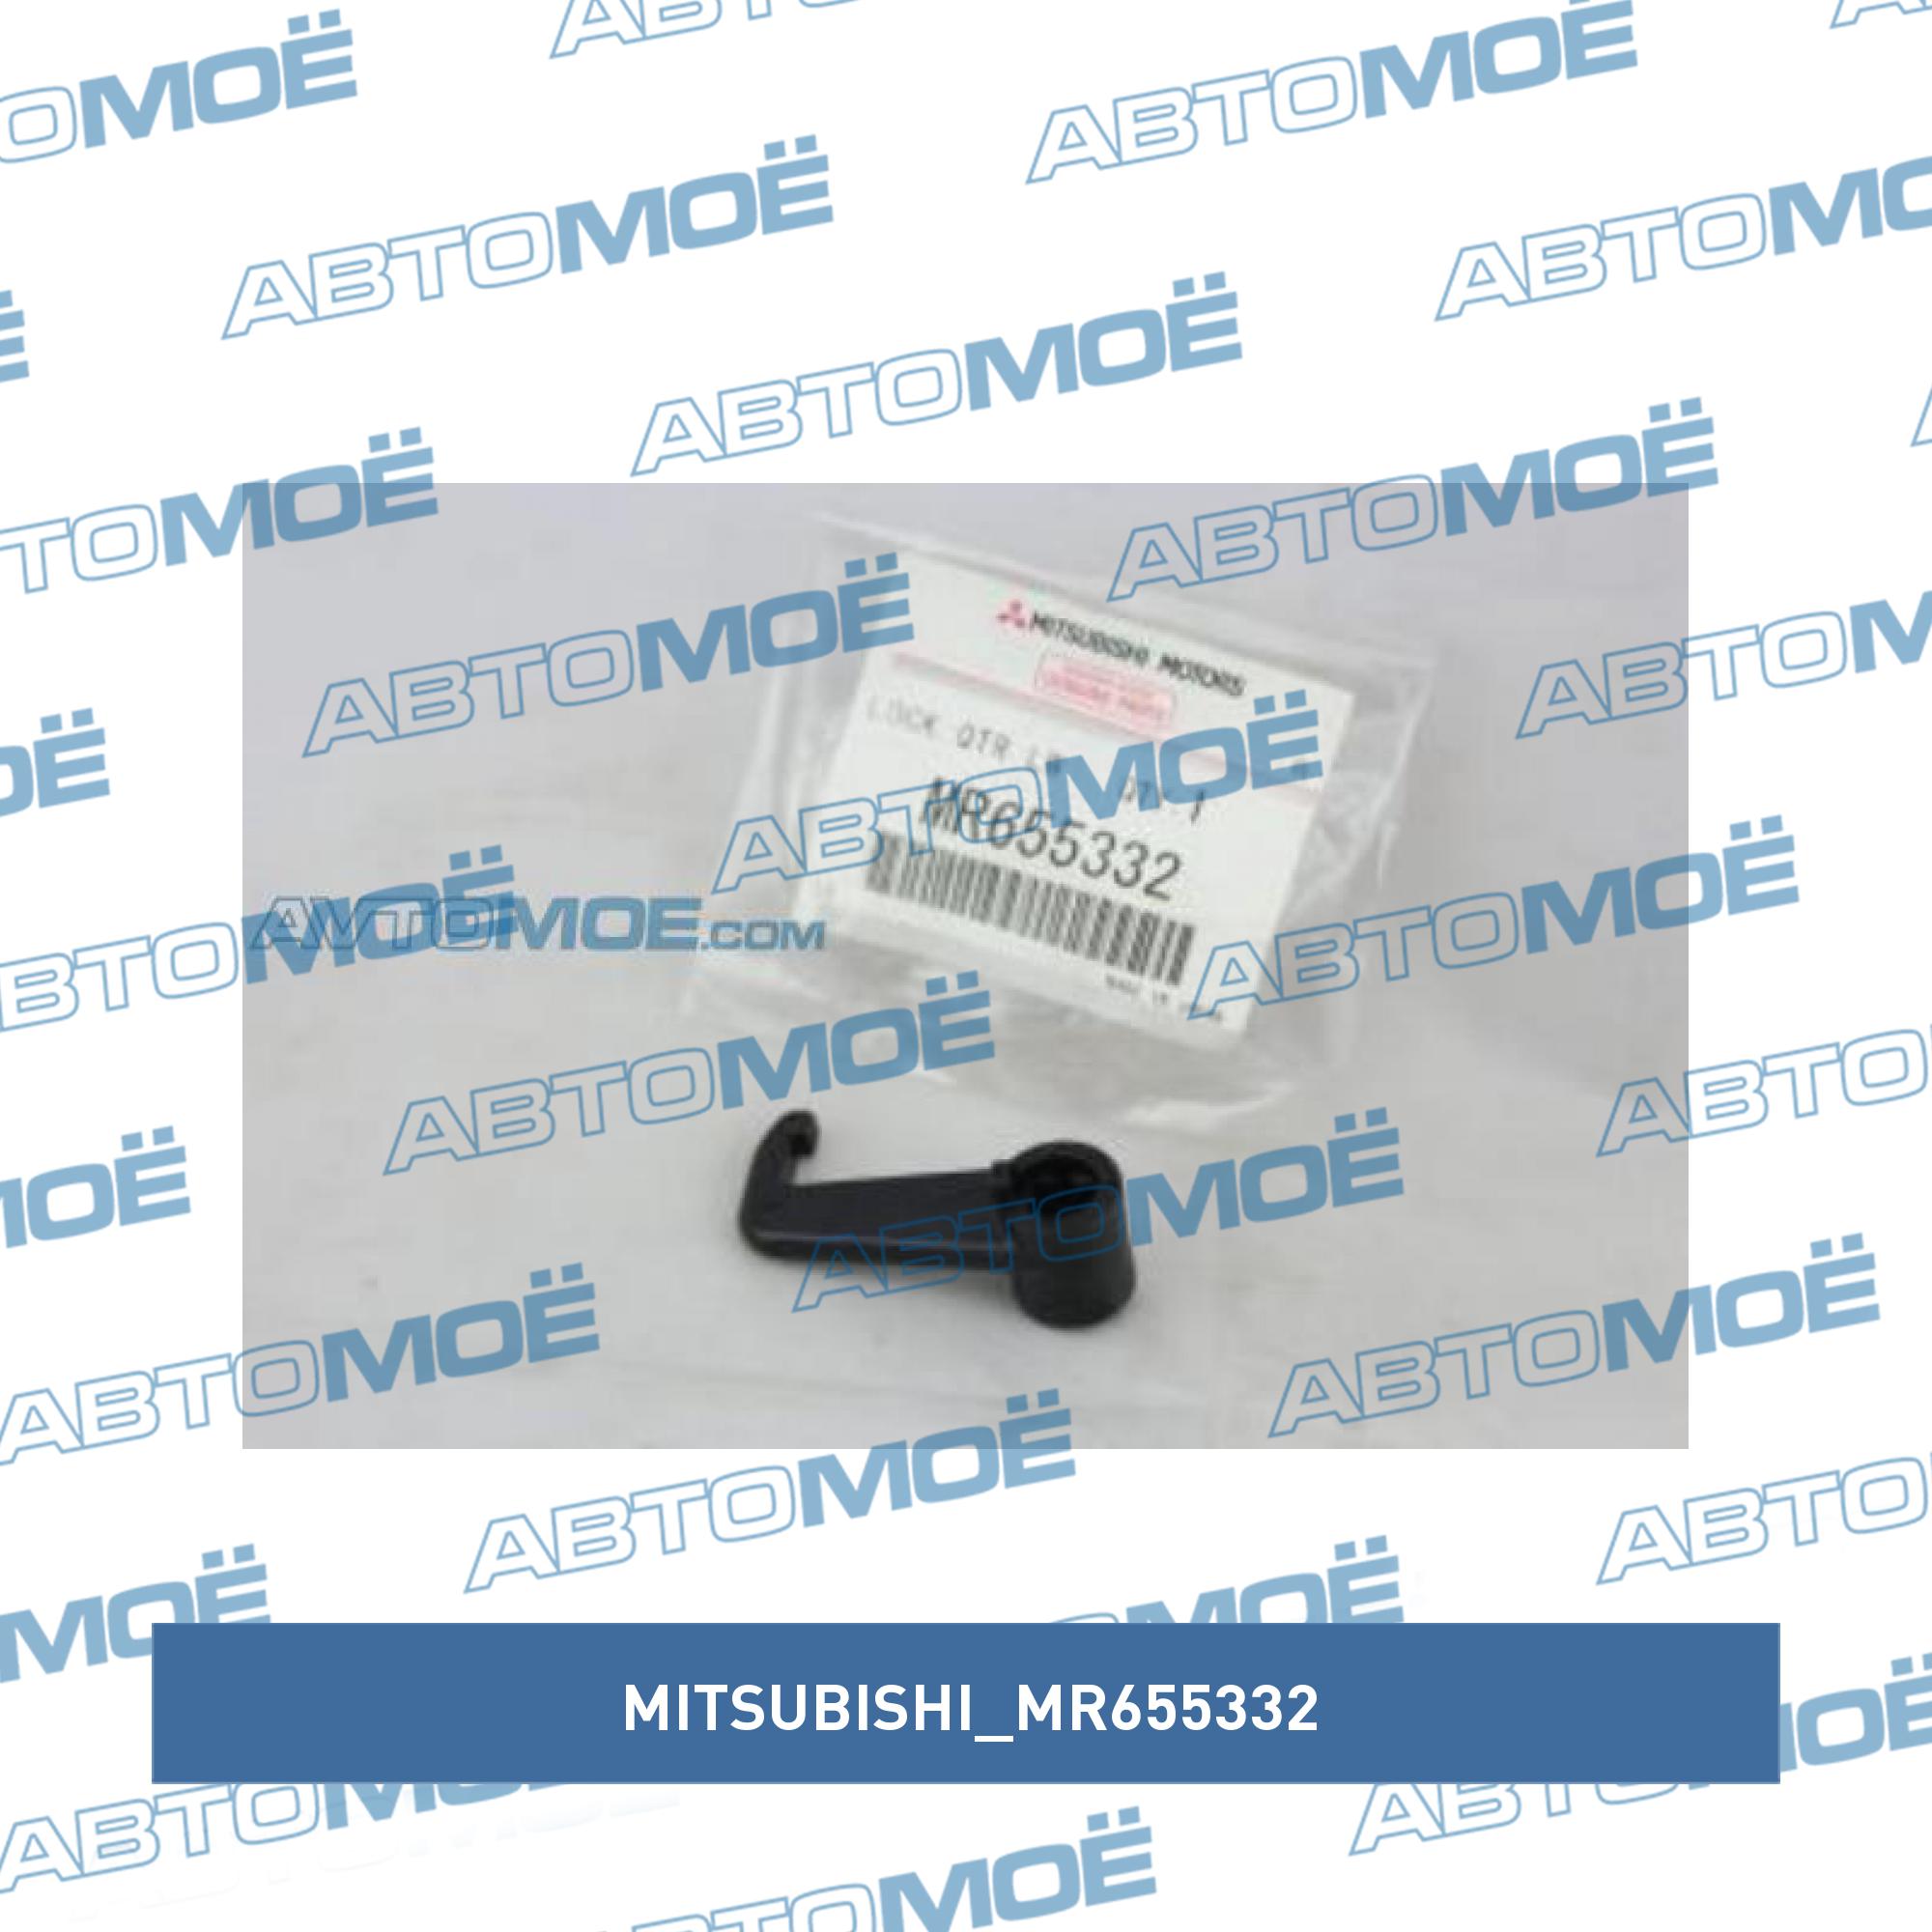 ЗАМОК ЛЮЧКА MITSUBISHI MR655332